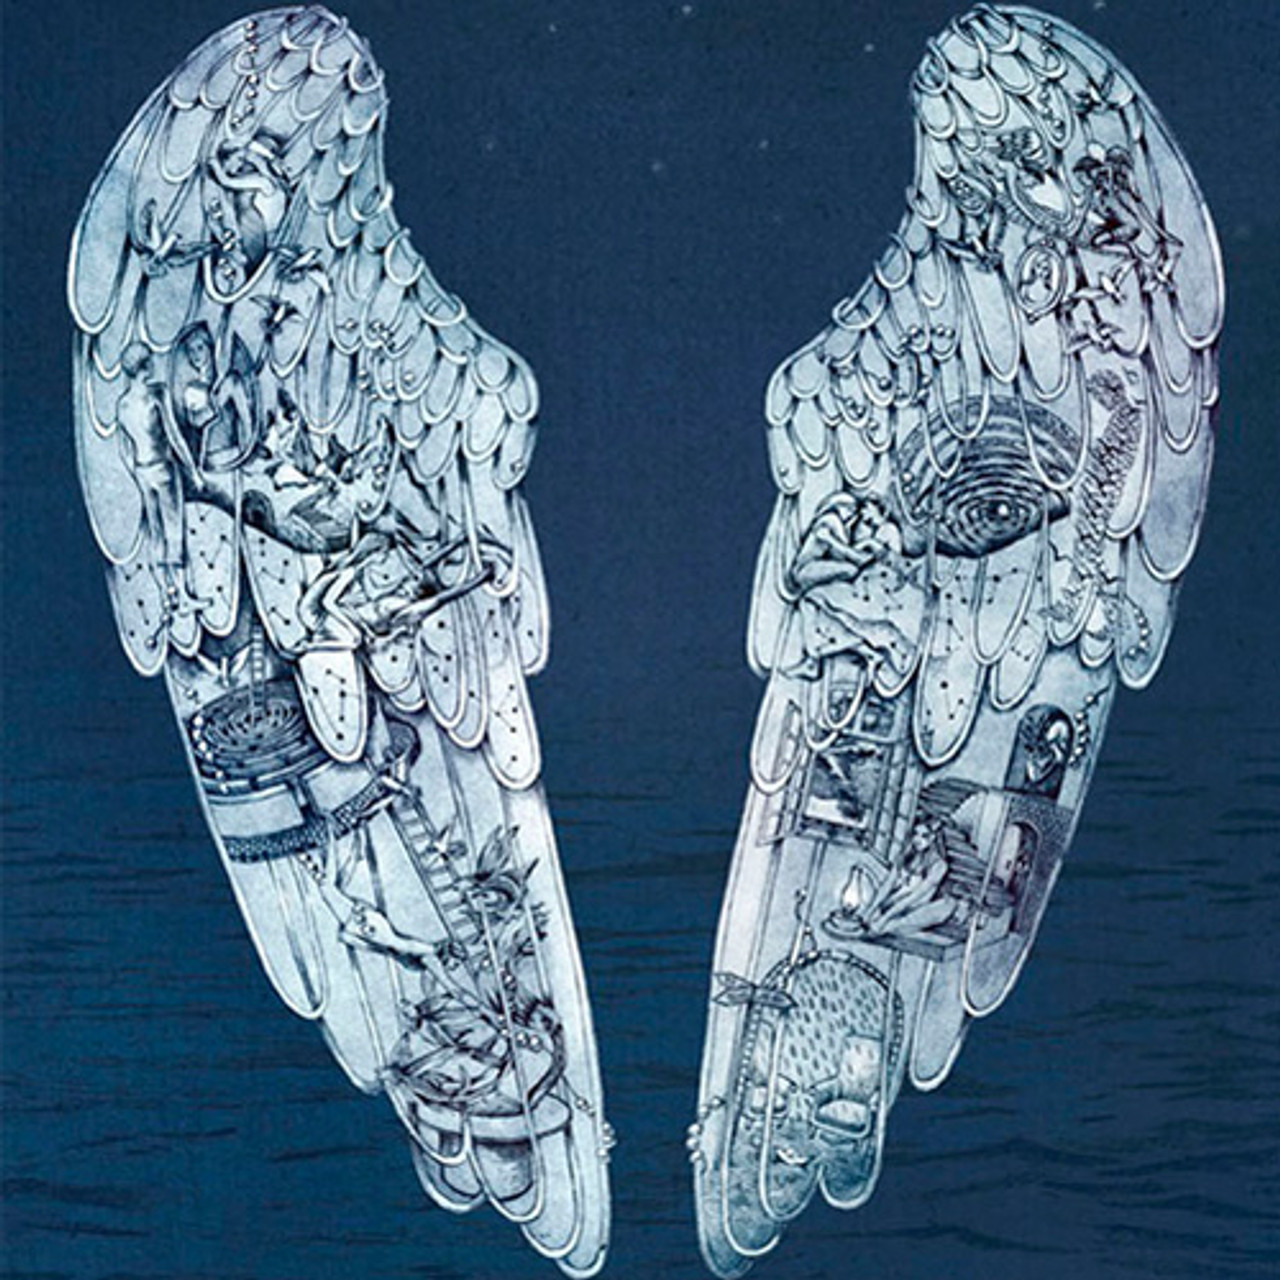 Coldplay Ghost Stories Vinilo Nuevo Lp